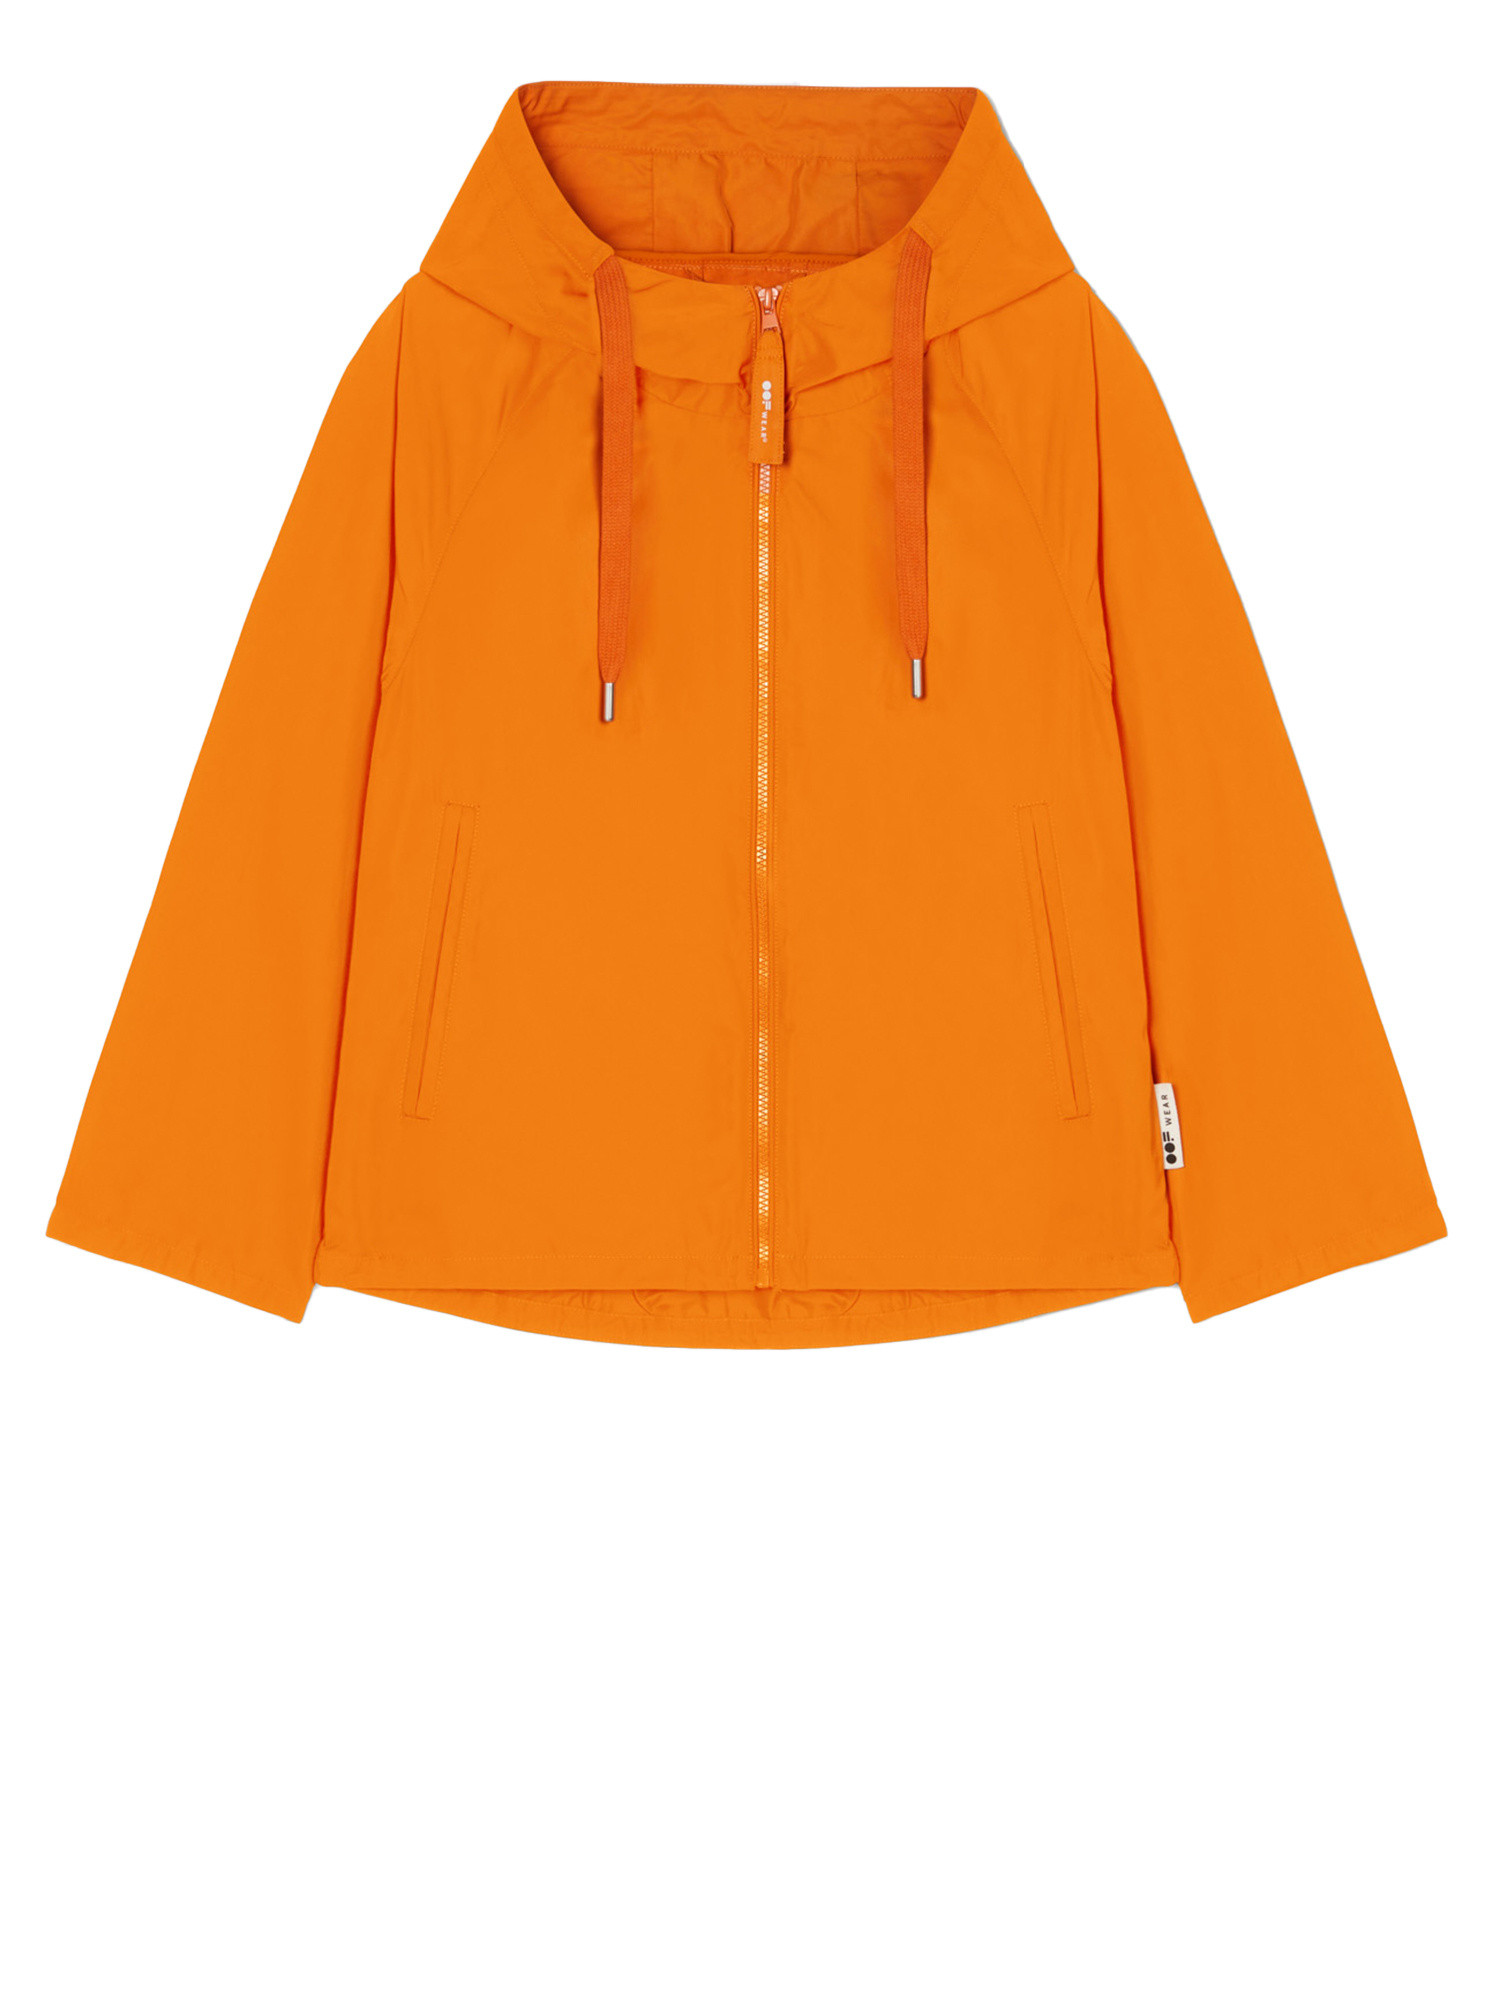 Oof Wear - Unlined cropped jacket with hood, Orange, large image number 0